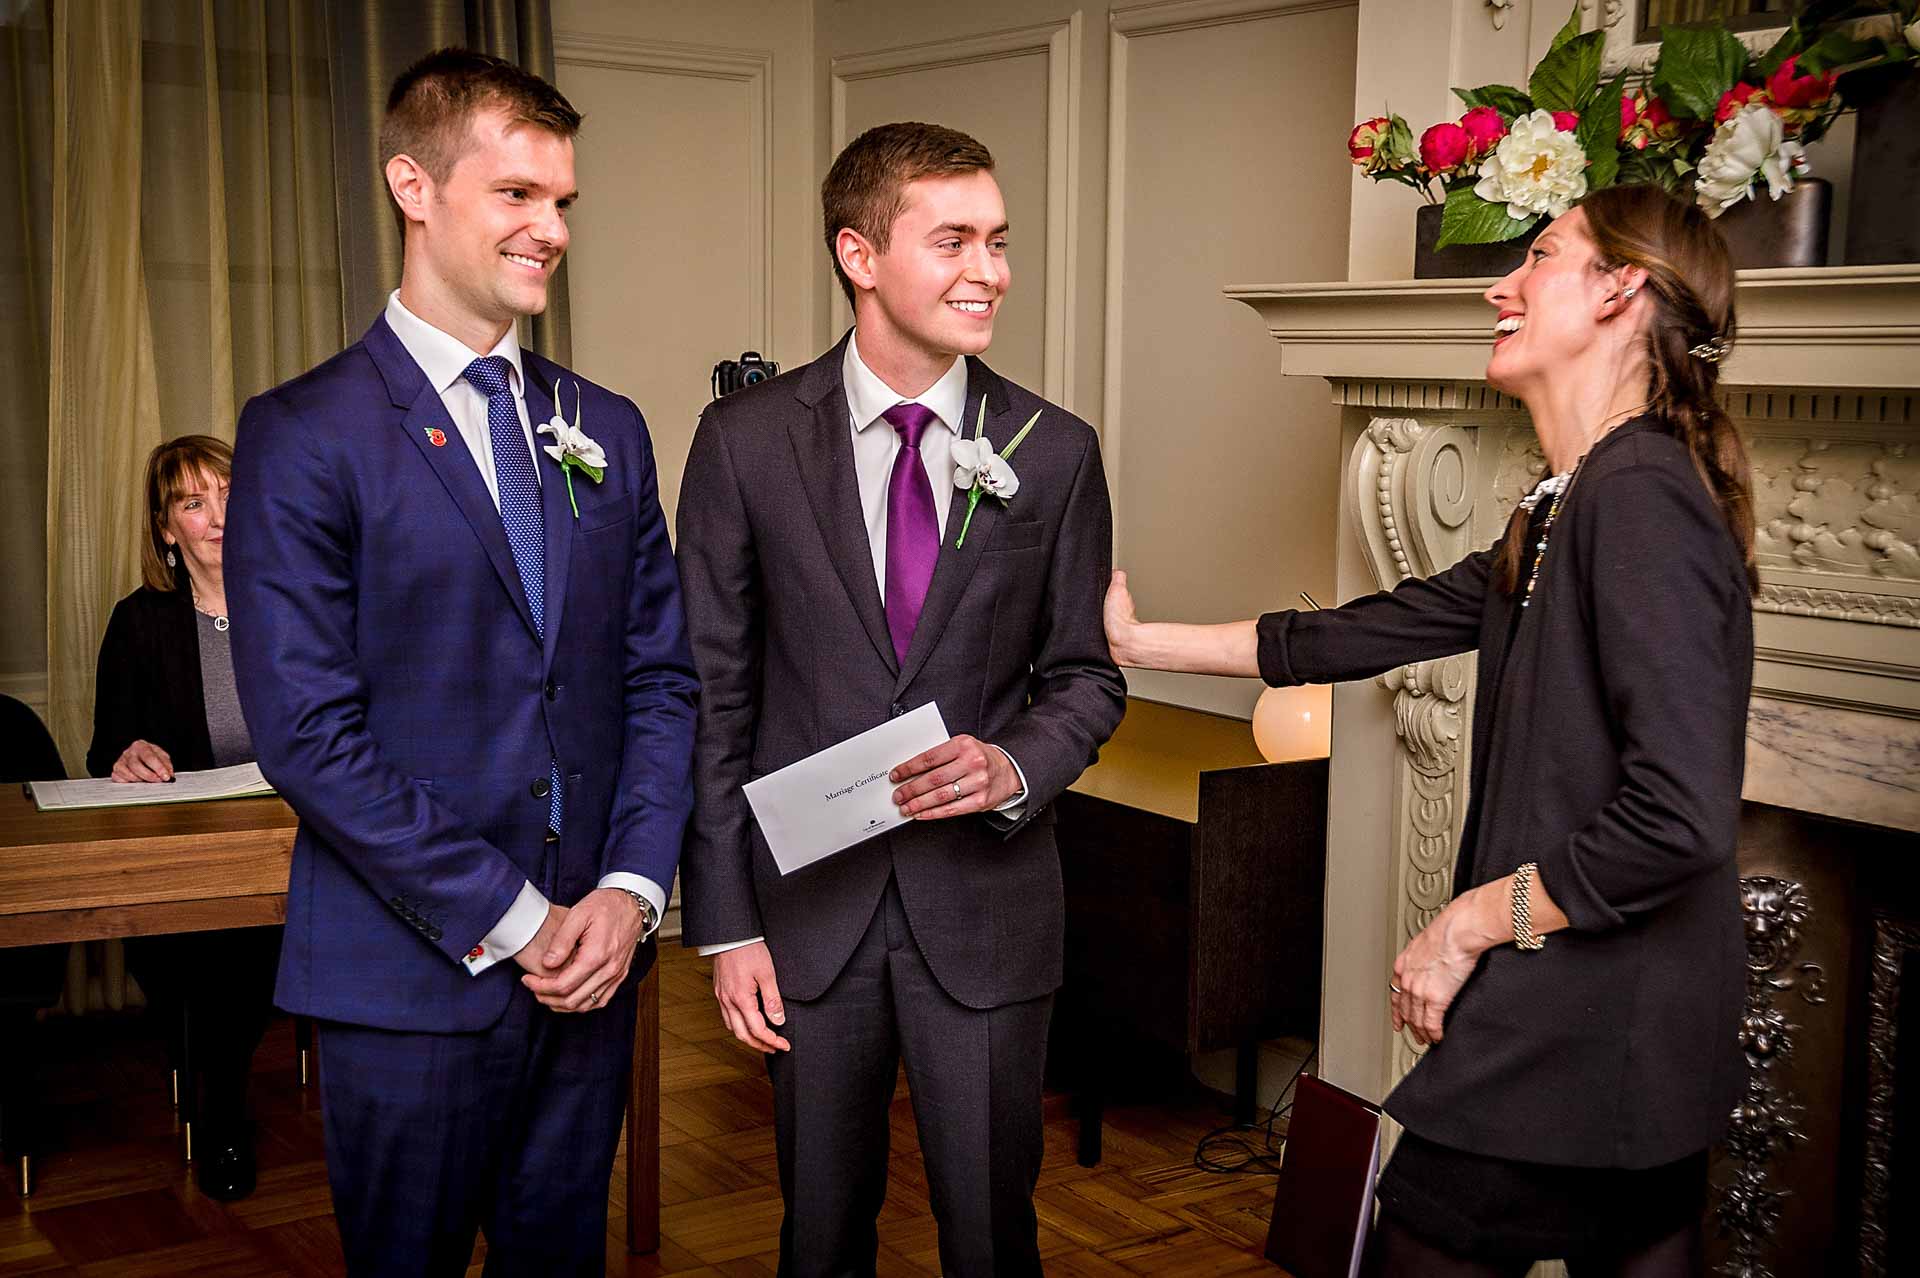 Register holding arm of groom at gay wedding